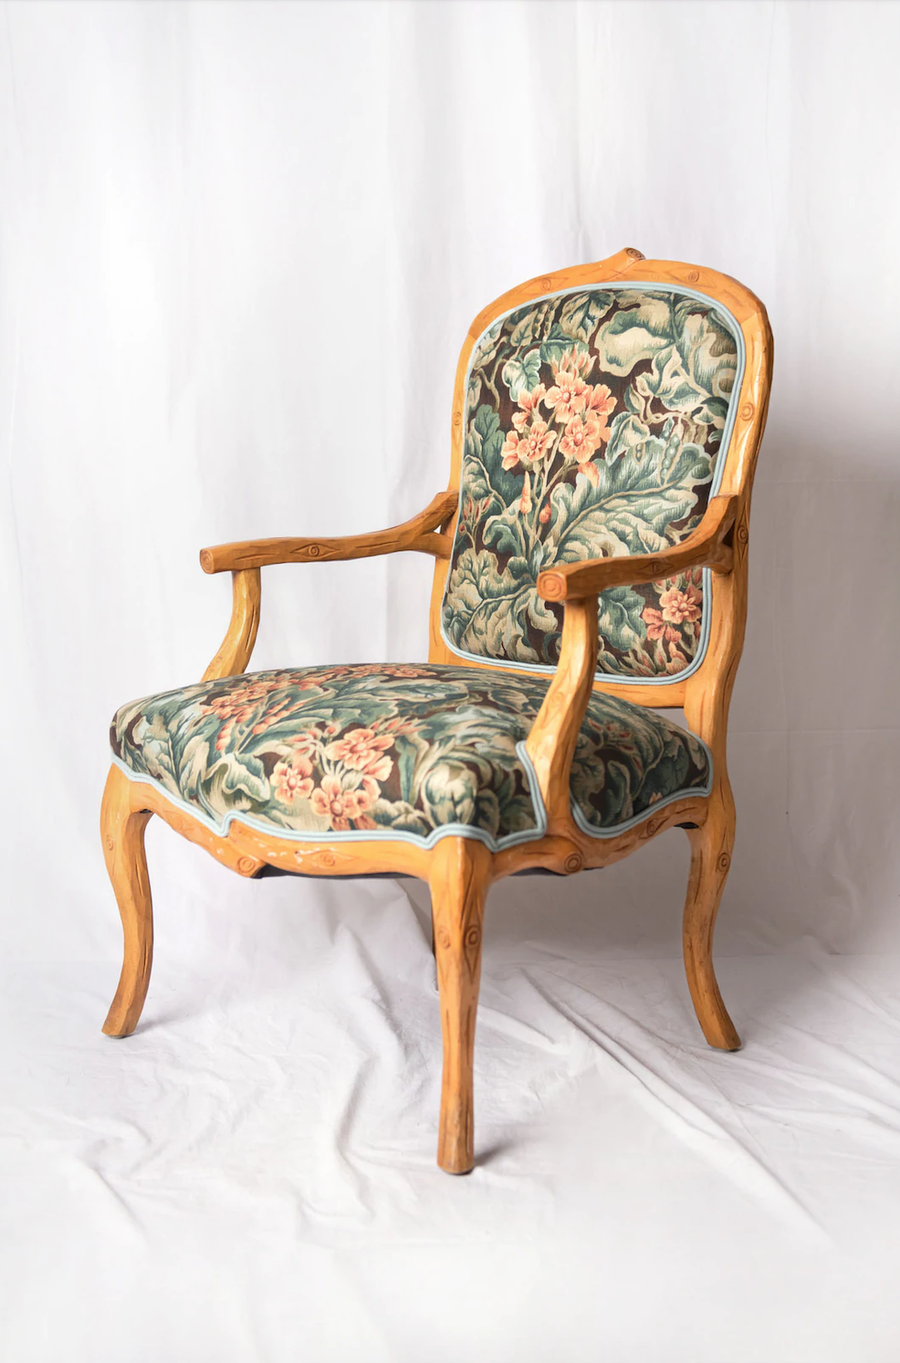 Upholstered Lounge Chair featured in Batsheva Hay's Batsheva Home collection.